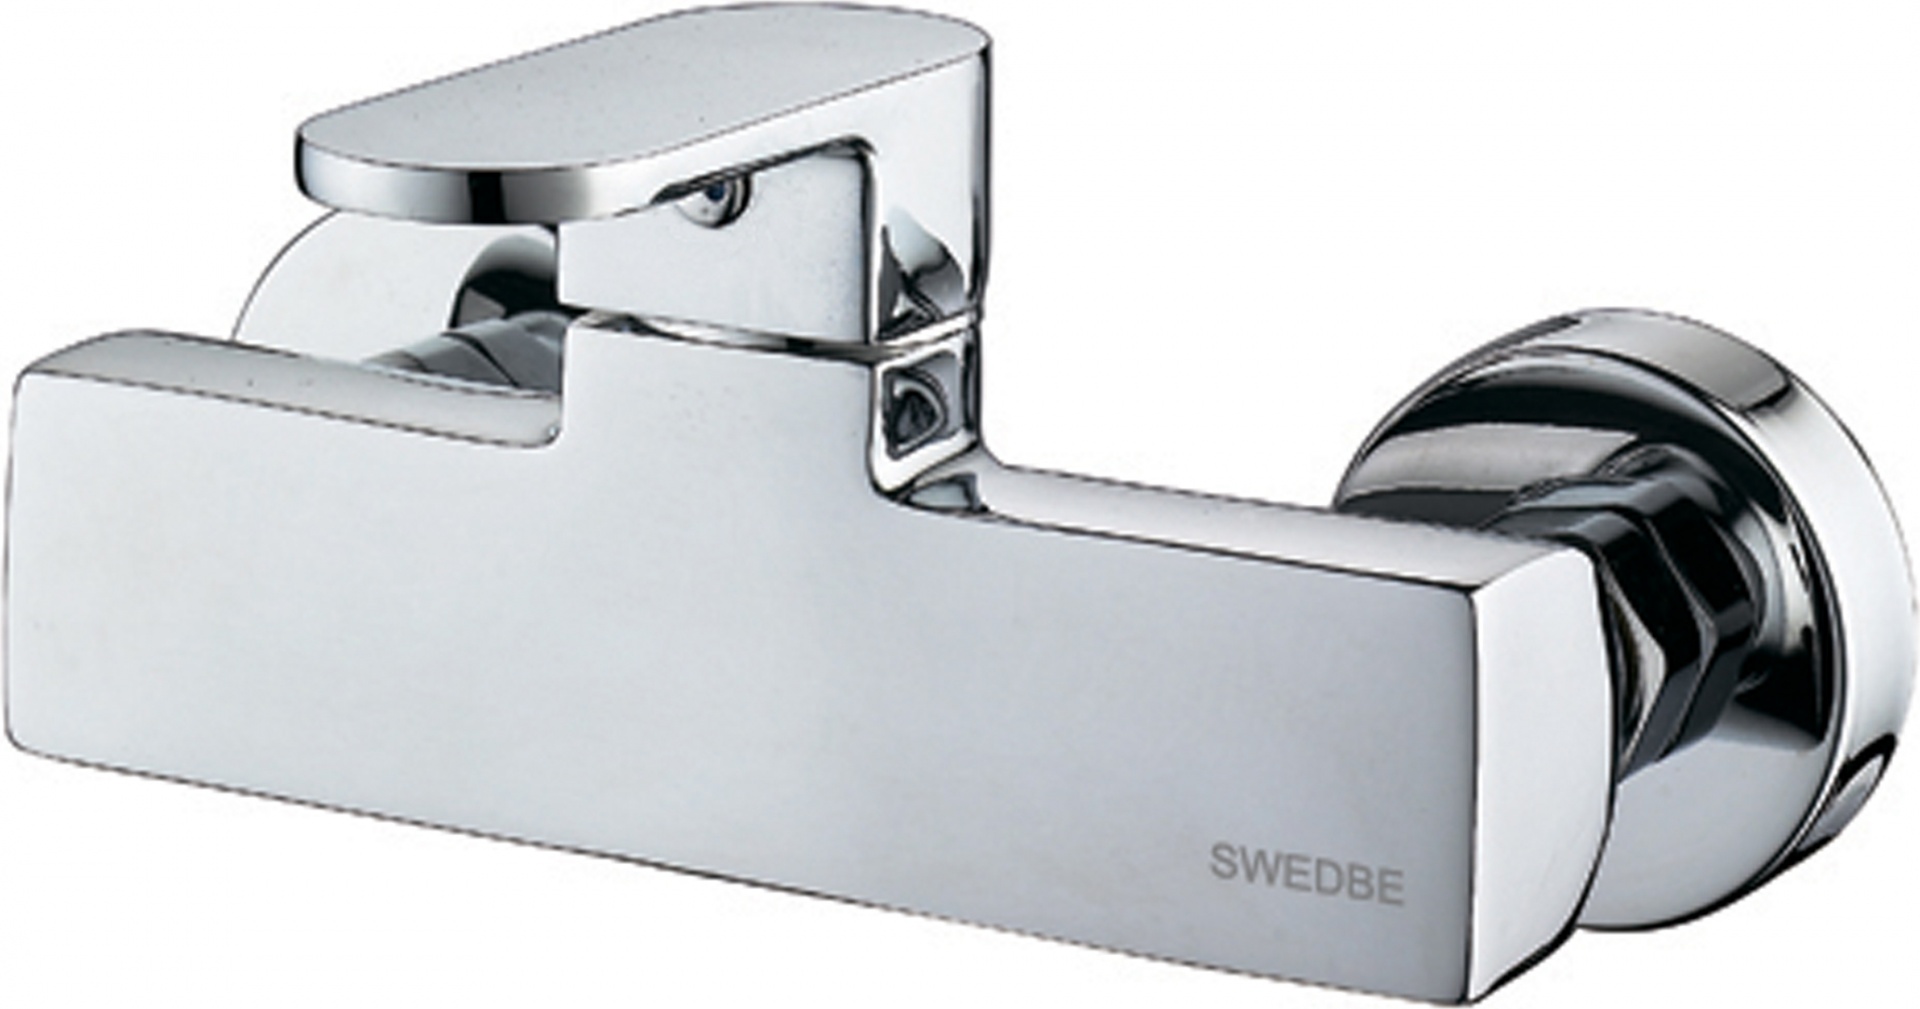 Смеситель для ванной swedbe. Смеситель для раковины Swedbe Lynx 2310. Однорычажный смеситель Swedbe 8040. Смеситель для ванны/душа Swedbe Lynx 2330. 5080 Swedbe.